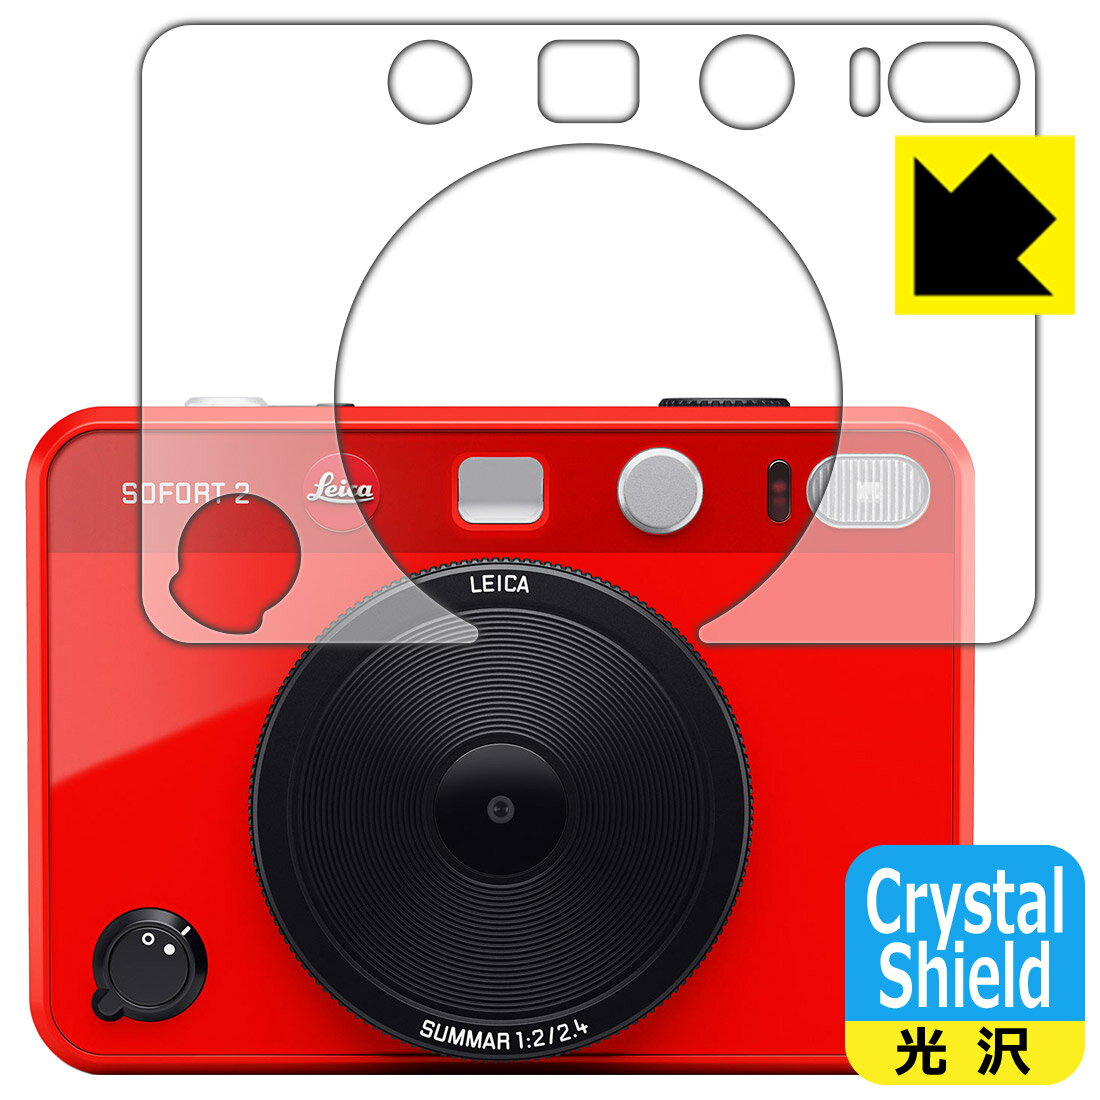 Crystal Shield【光沢】保護フィルム ライカ ゾフォート2 (LEICA SOFORT 2) レンズ側用 (3枚セット) 日本製 自社製造直販